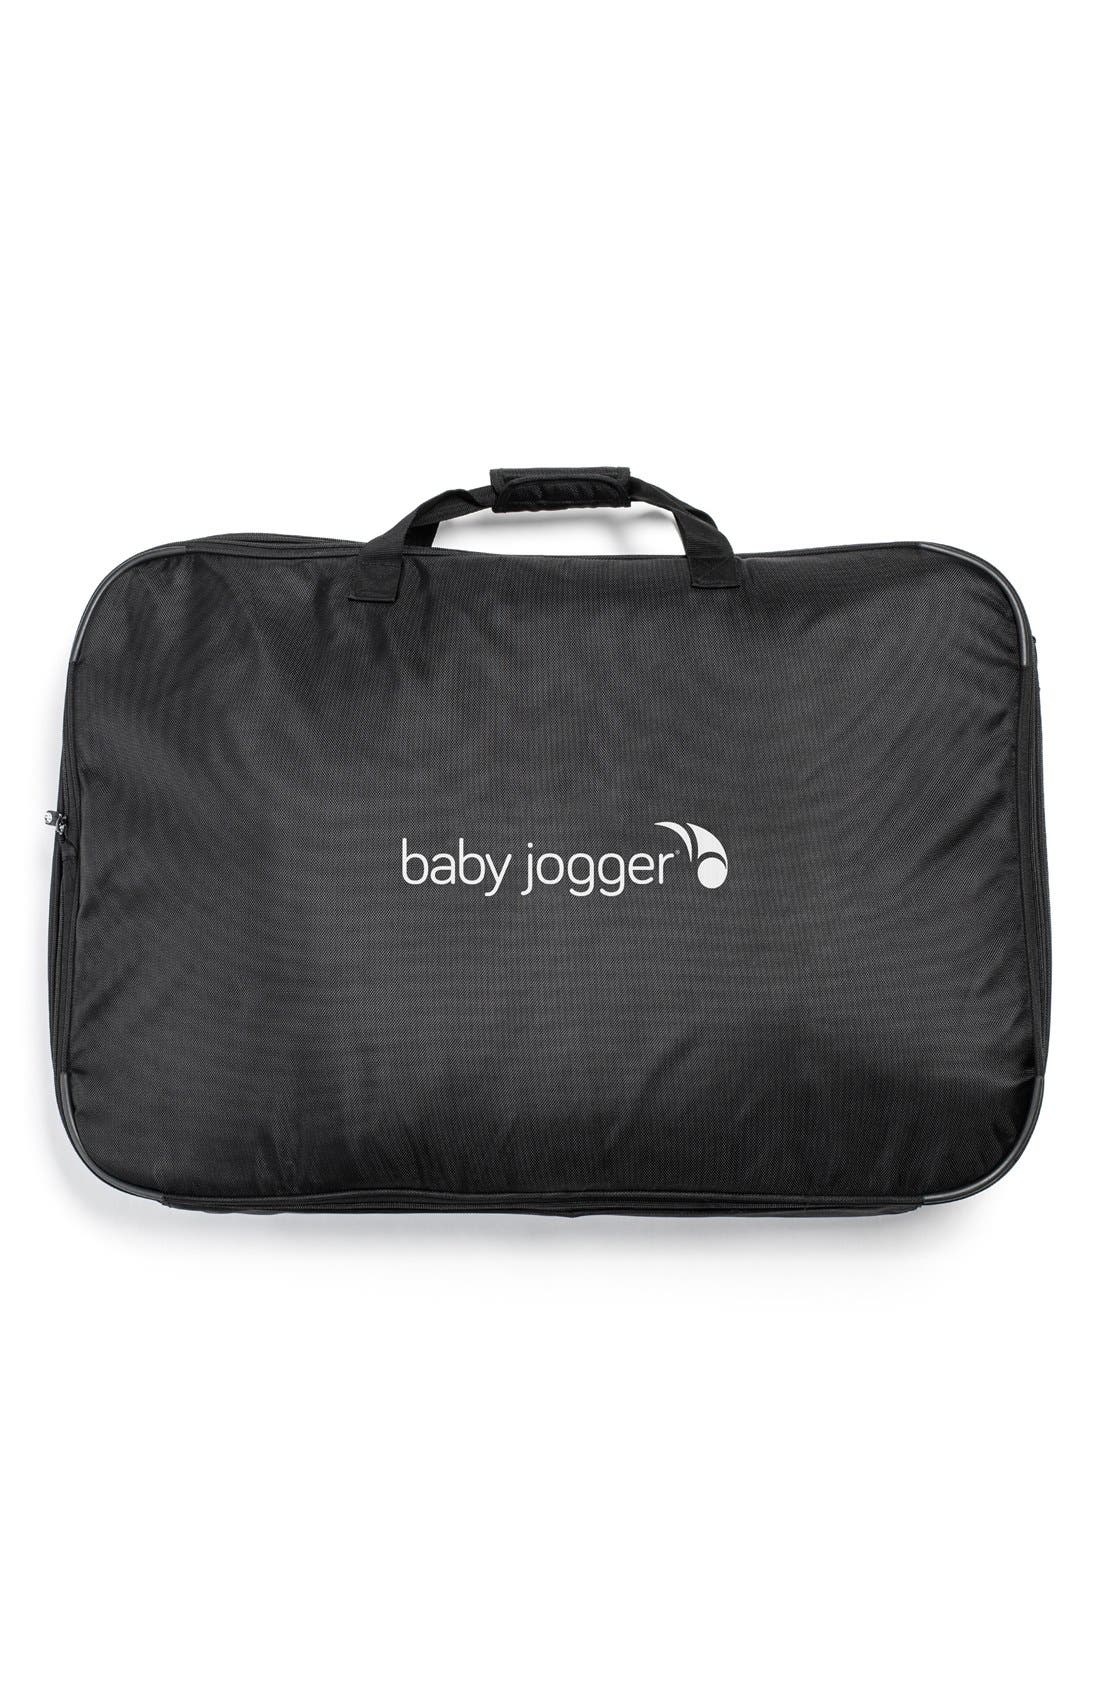 baby jogger city mini gt carry bag